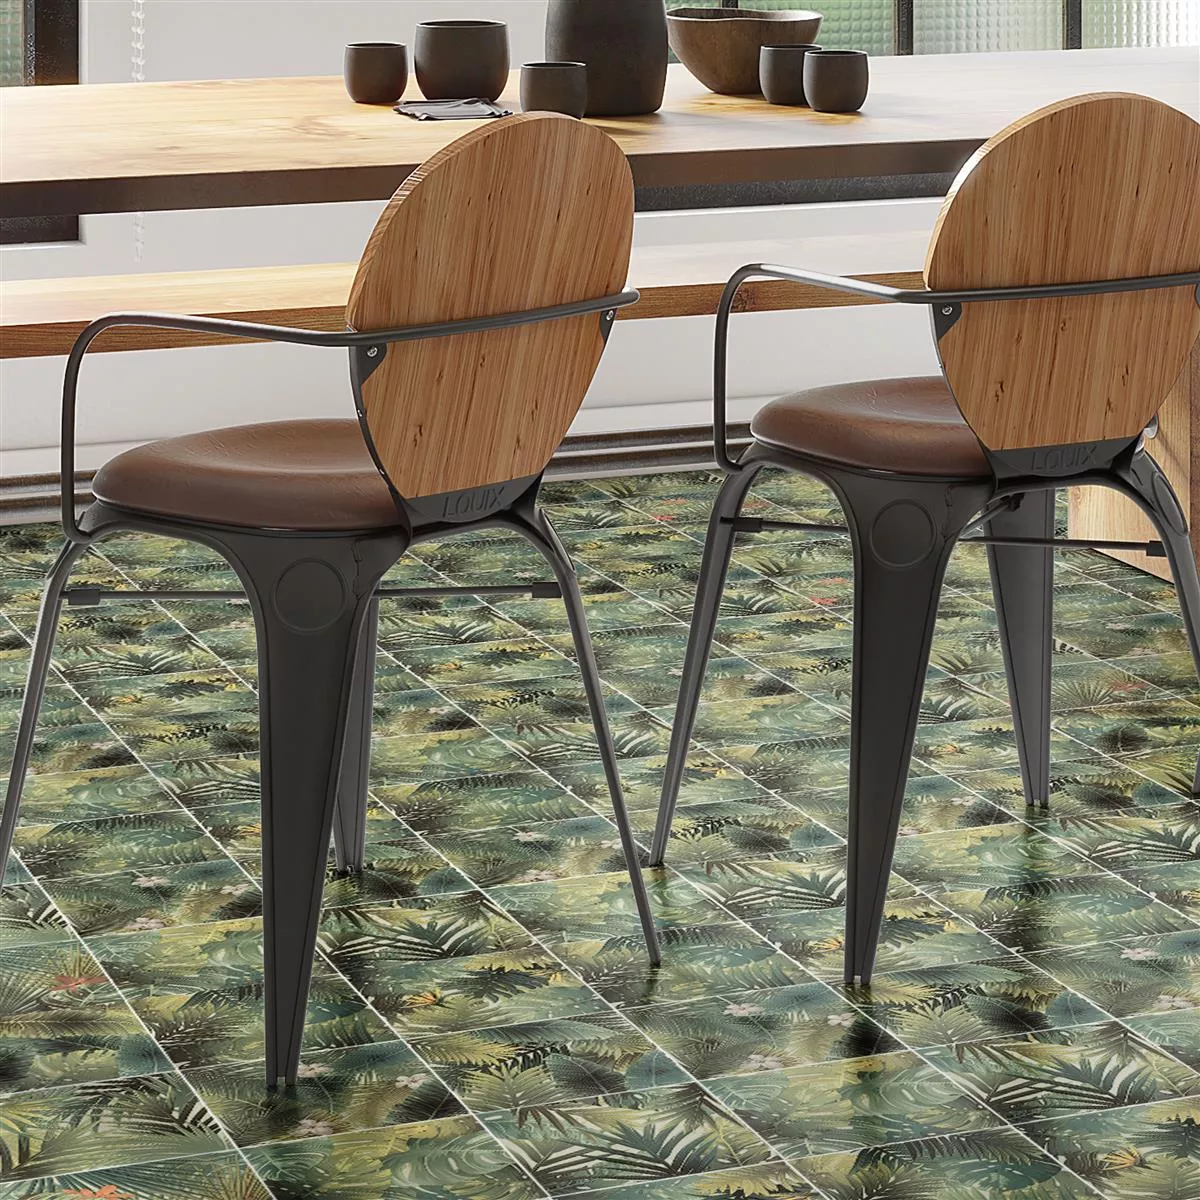 Sample Floor Tiles Gran Canaria 18,5x18,5cm